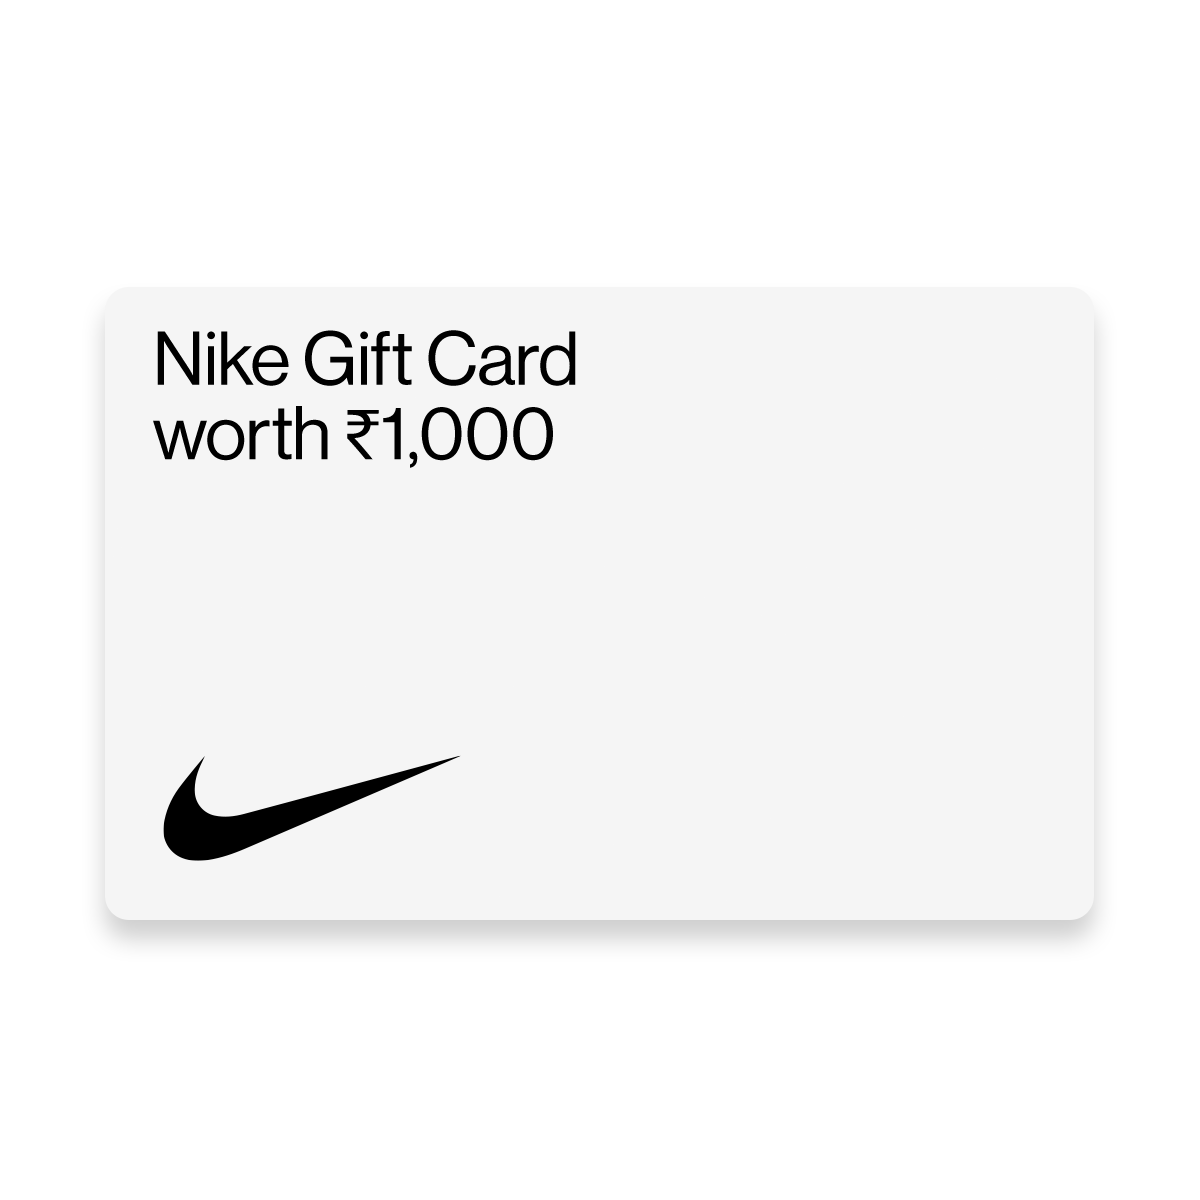 Карта найка. Визитная карточка Nike. Карта Nike. Гифт карта найк. Подарочный сертификат найк.